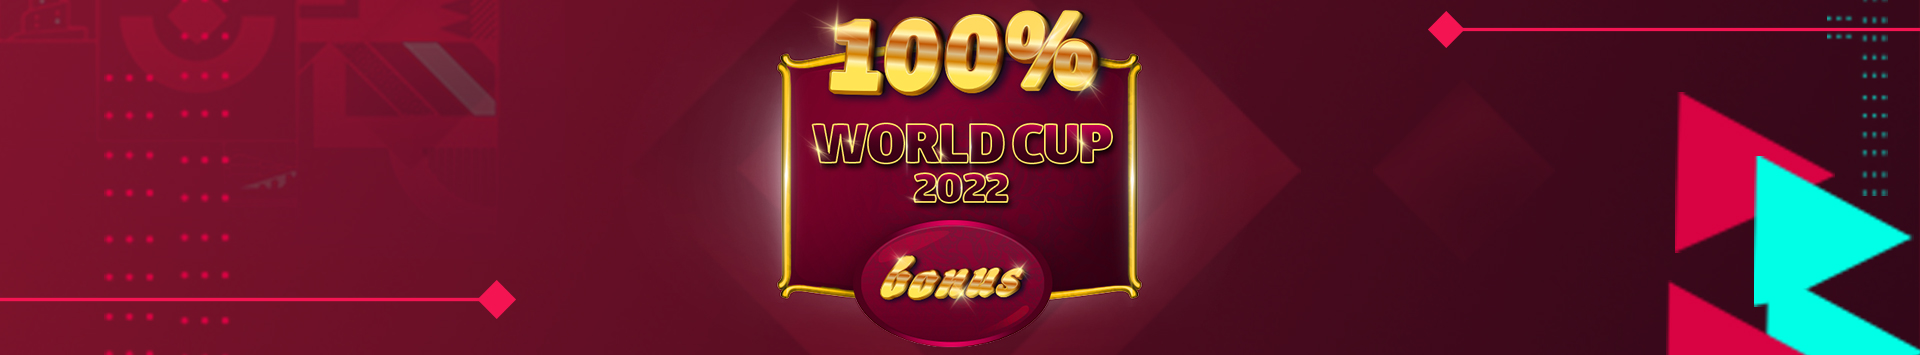 100% World Cup 2022 Bonus